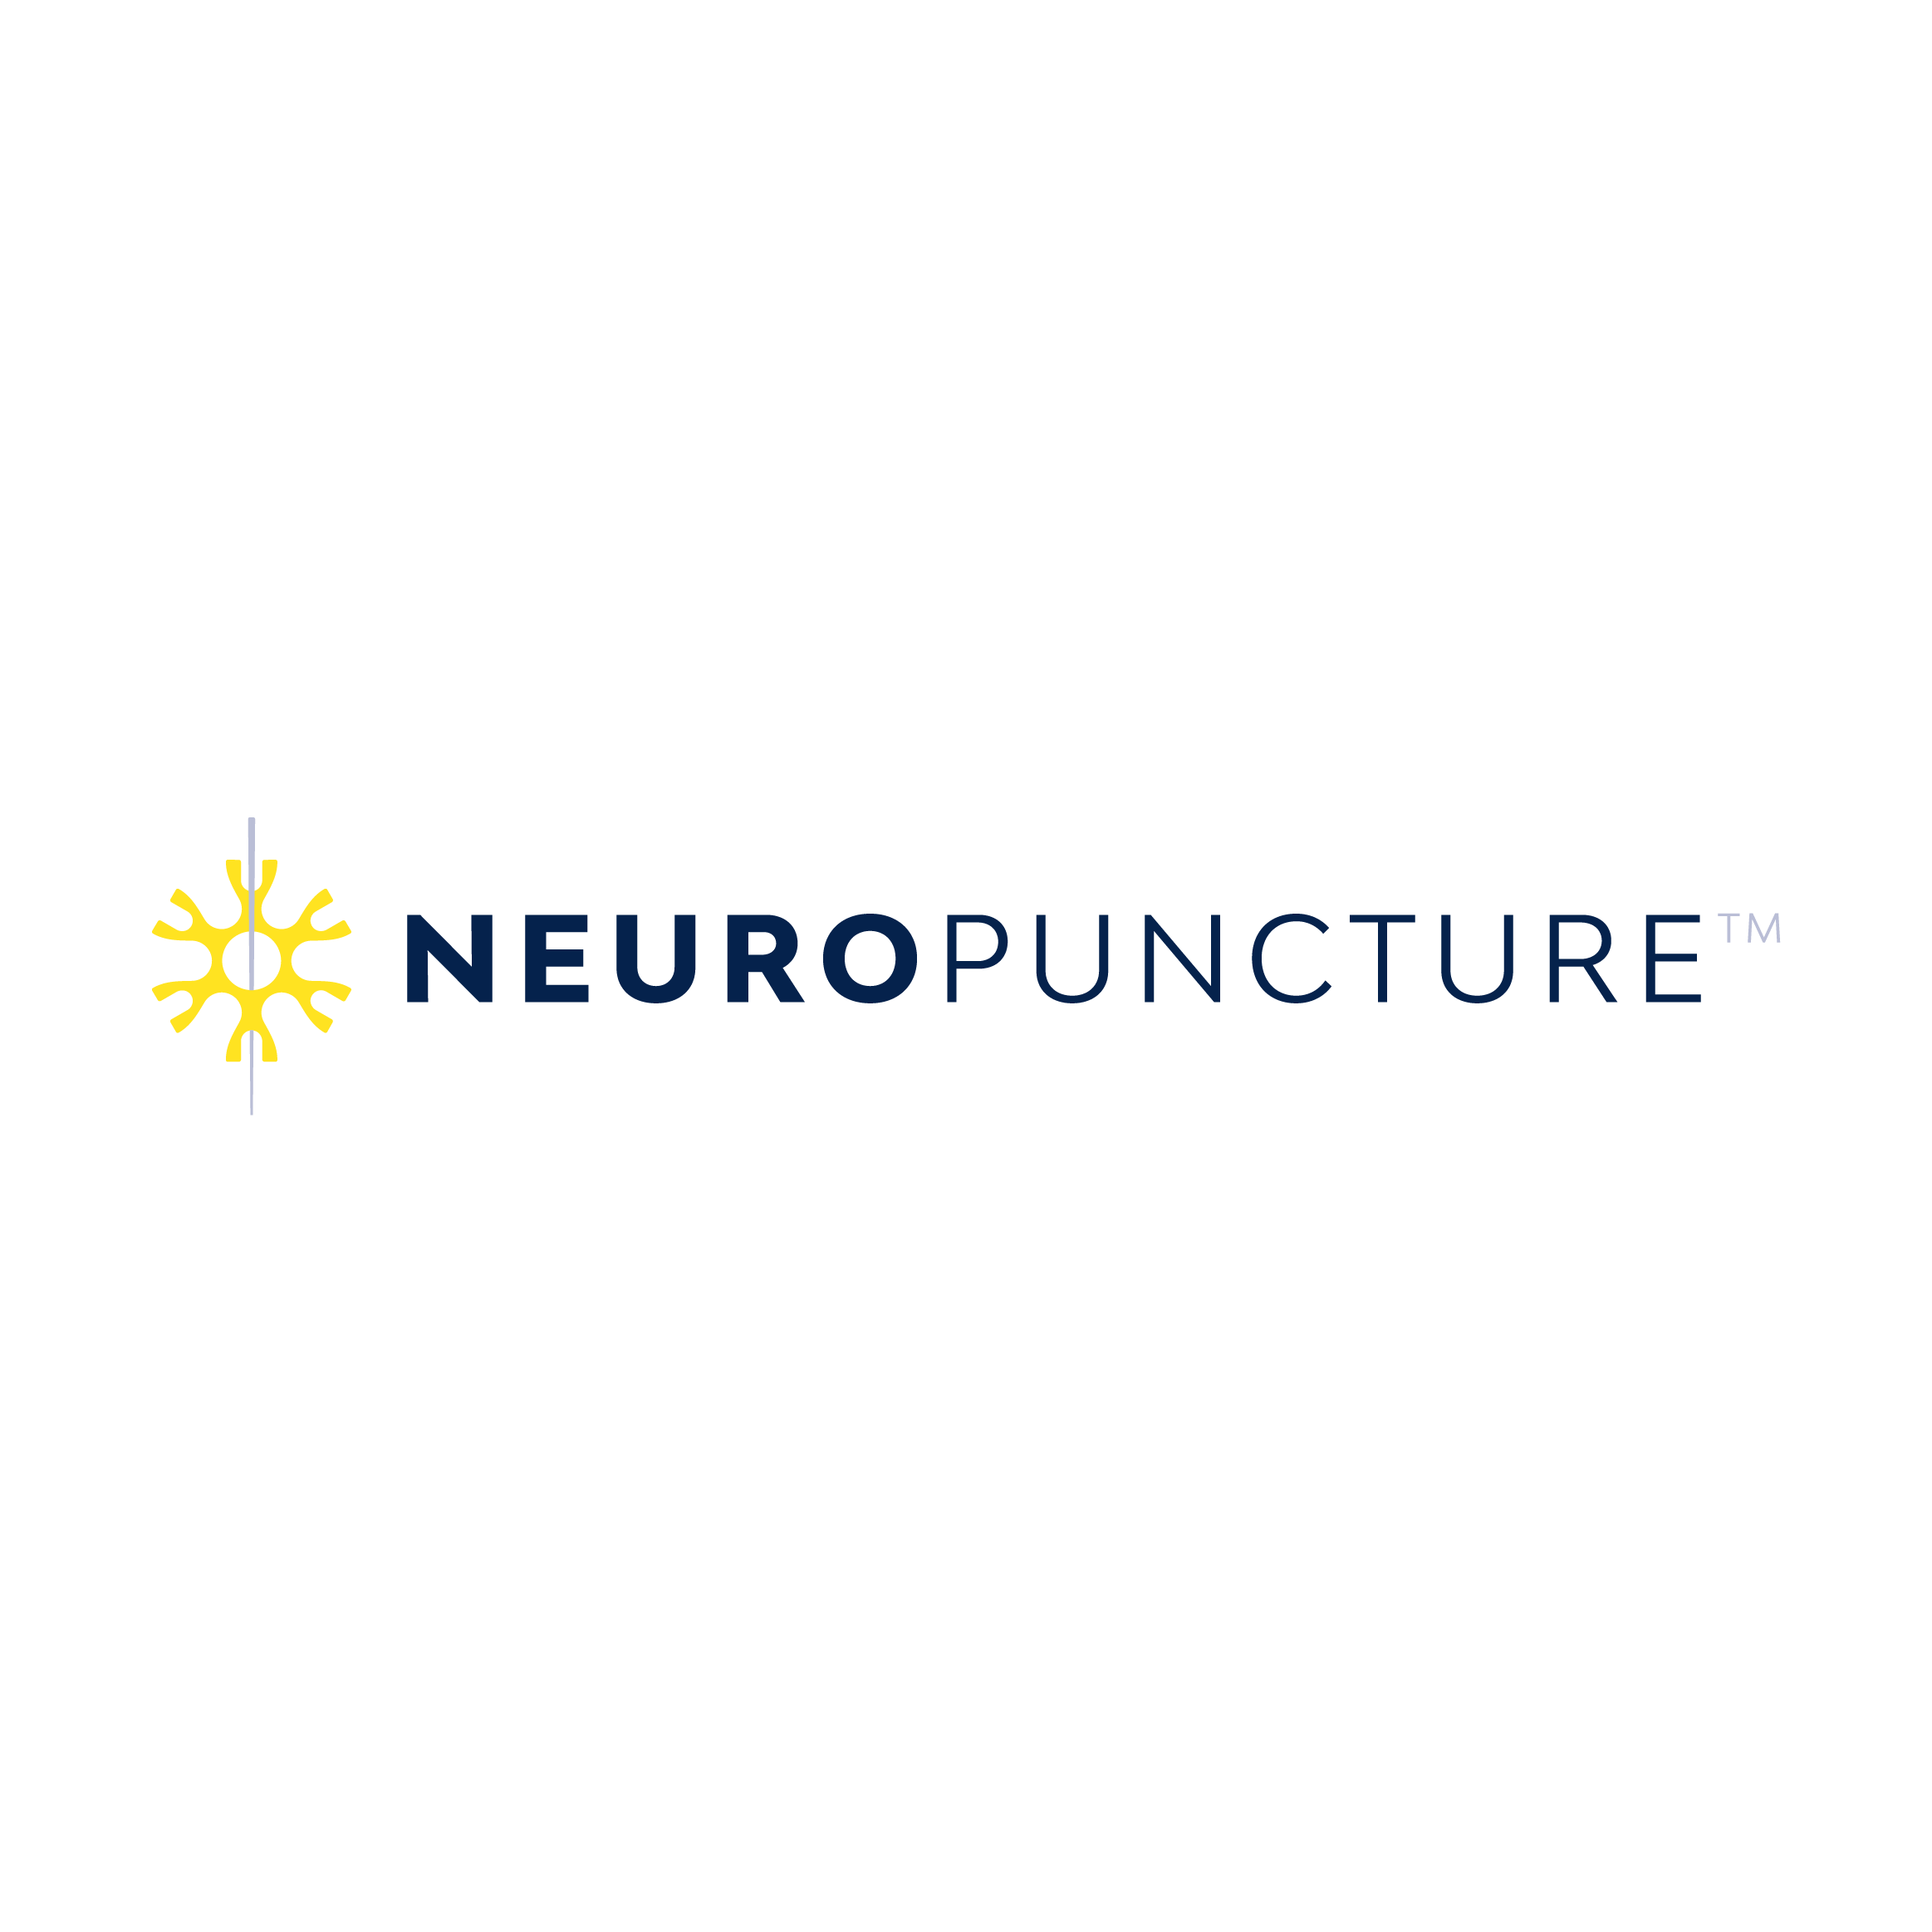 New Neuropuncture logo, successful rebrand of Neuropuncture.